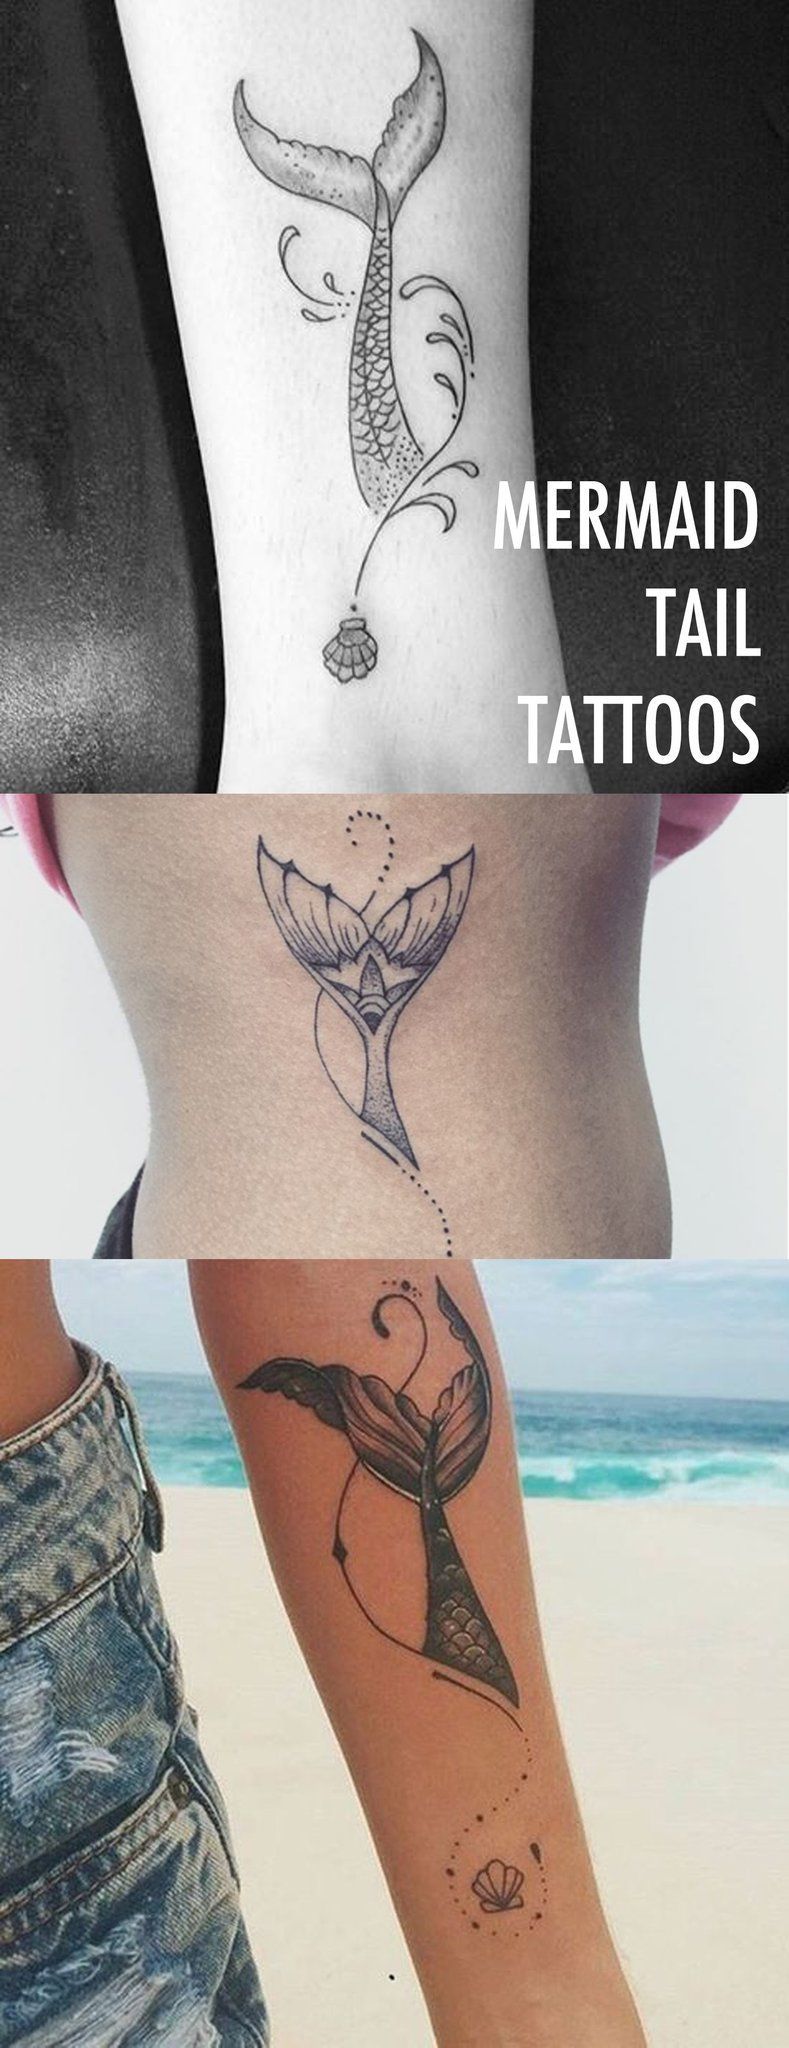 Mermaid Tail Tattoo Ideas for Women at MyBodiArt.com – Small Black Arm Sleeve Seashell Rib Tatt